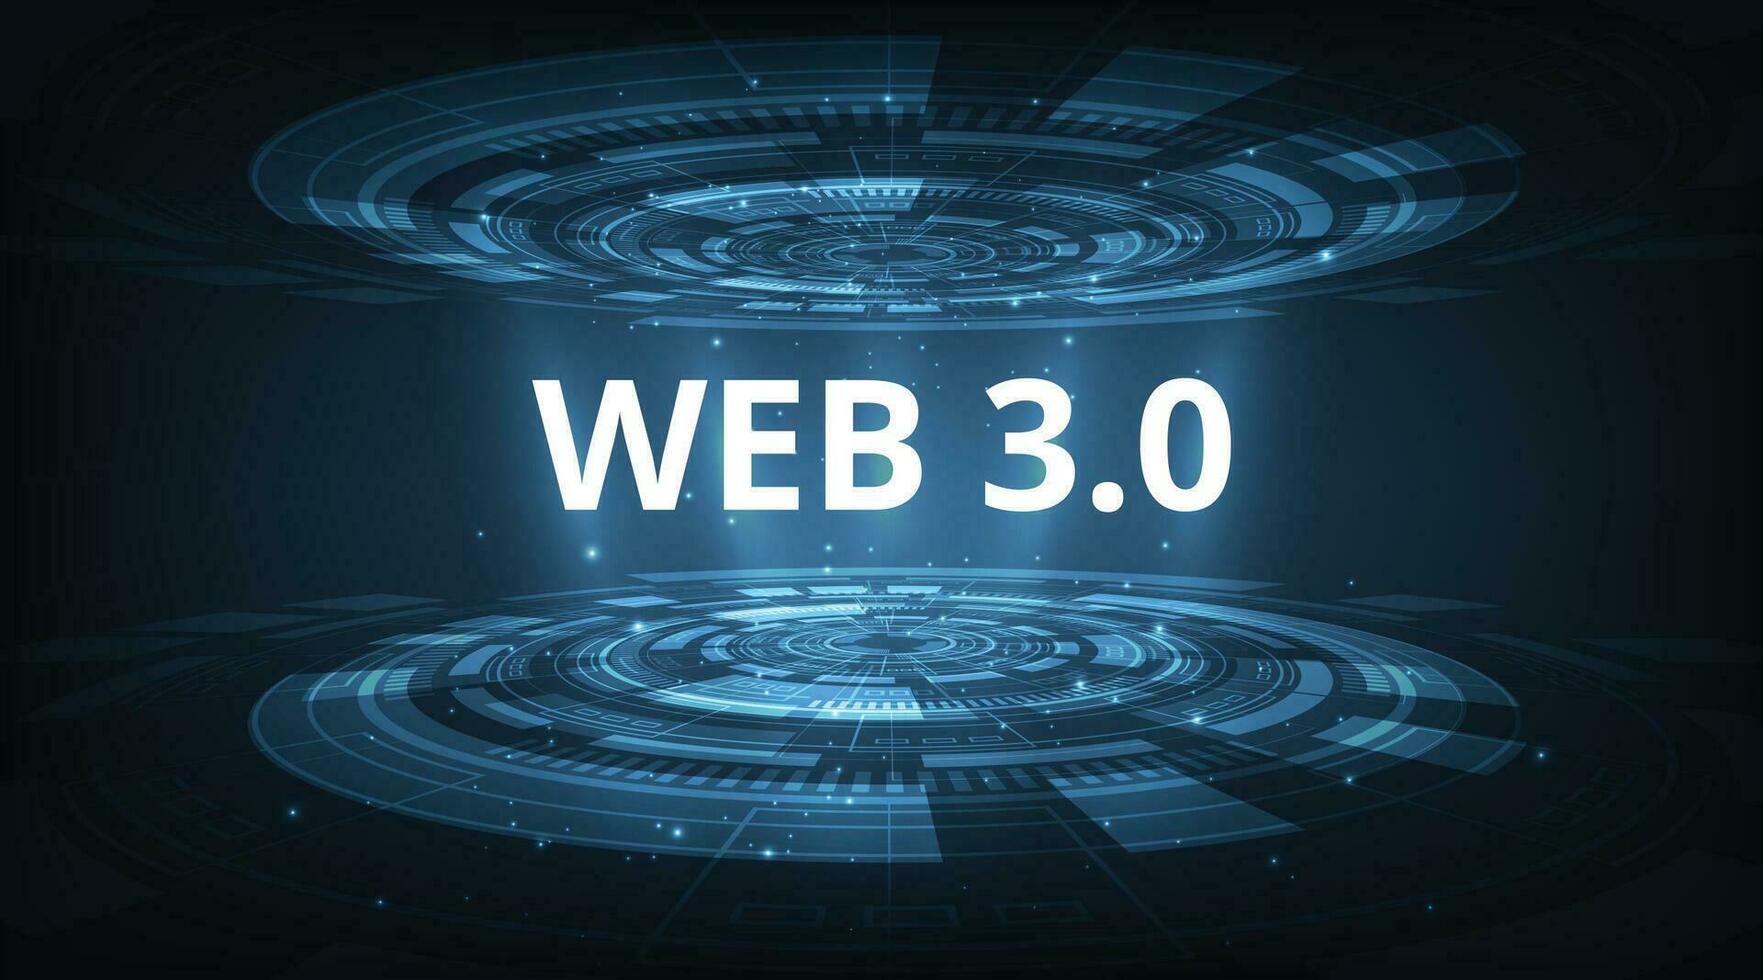 Netz 3.0 Text auf Podium 3d Technologie Illustration Vektor. vektor